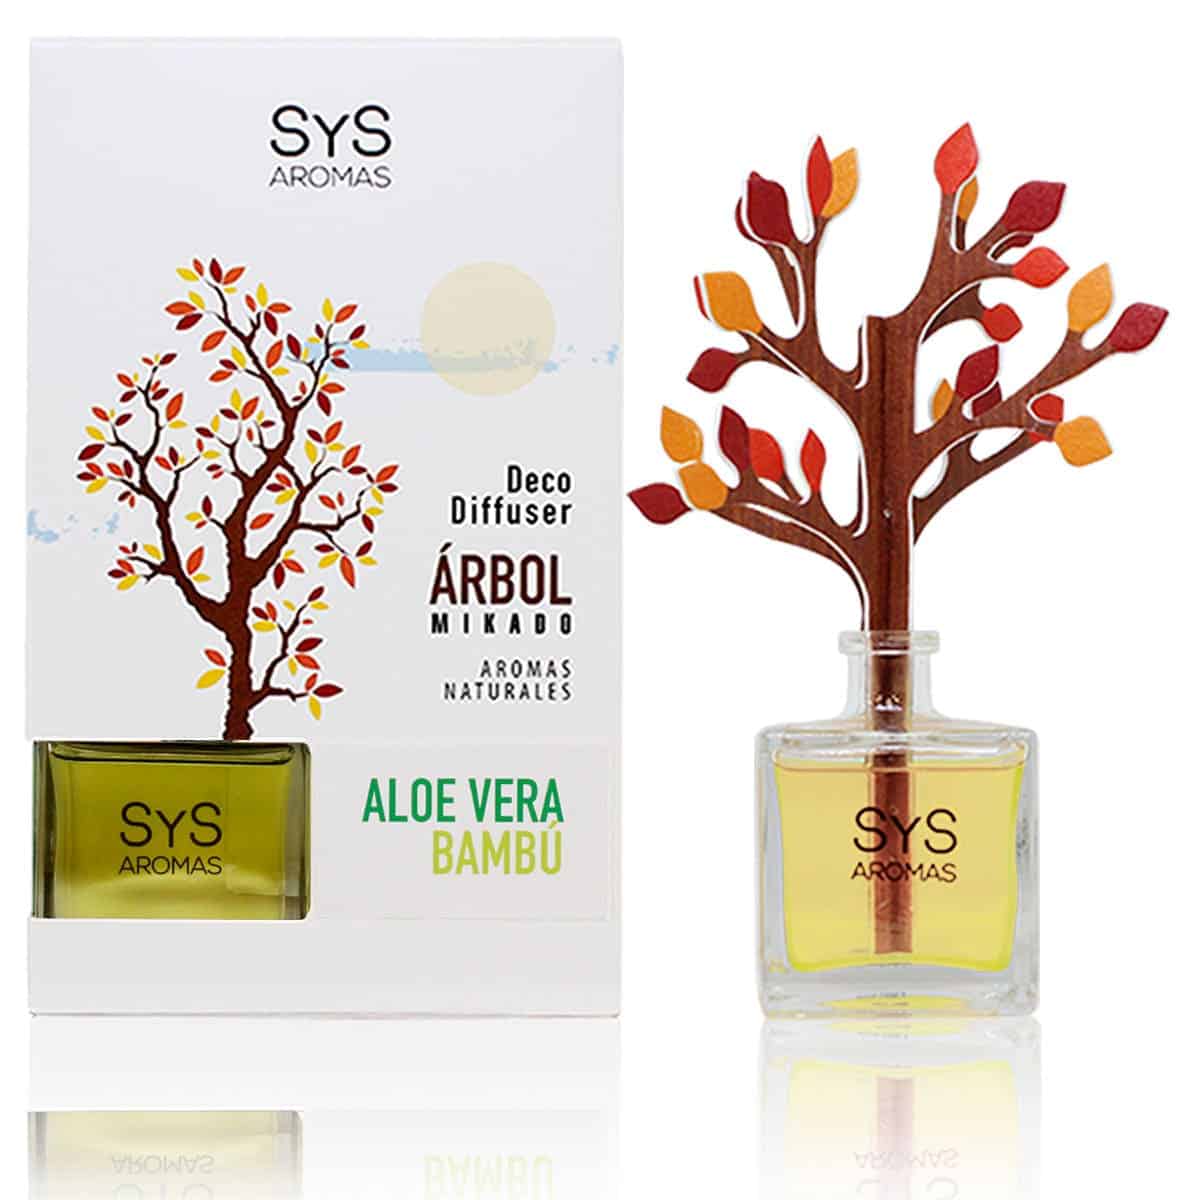 Buy Aloe Vera Bamboo Tree diffuser Air Freshener 90ml SYS Aromas